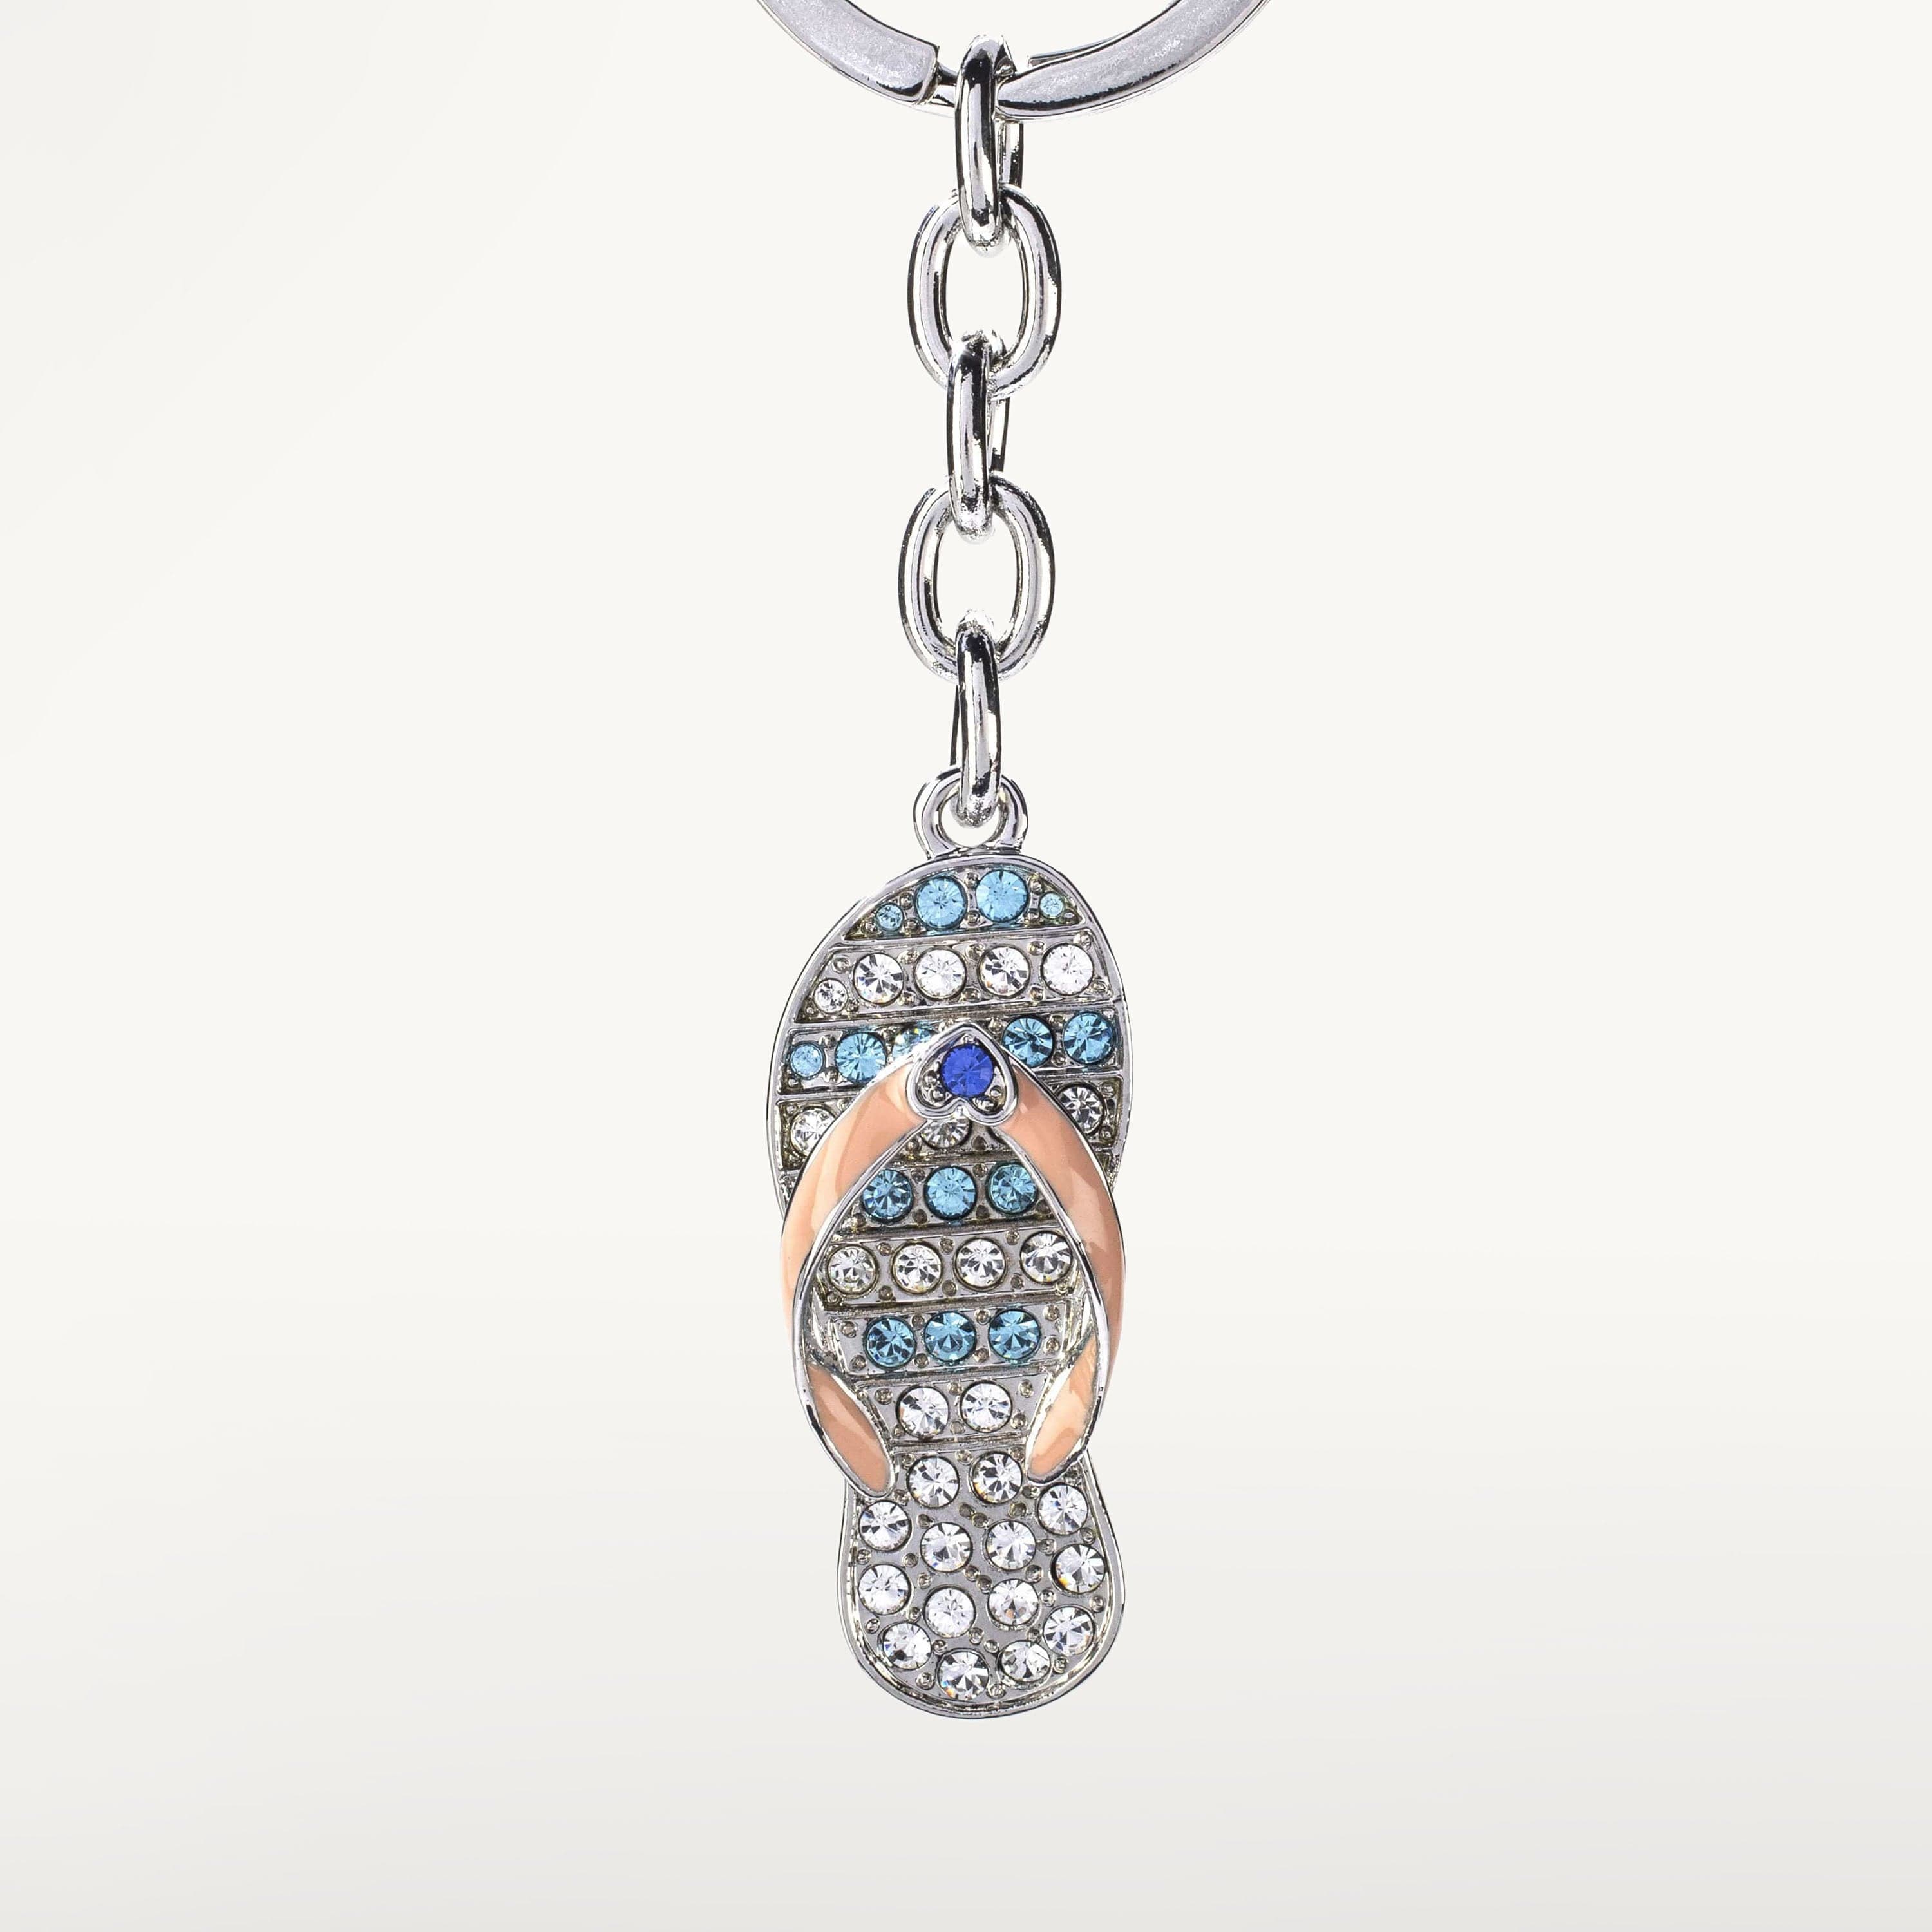 Kalifano Crystal Keychains Pink Flip Flop Keychain made with Swarovski Crystals SKC-098